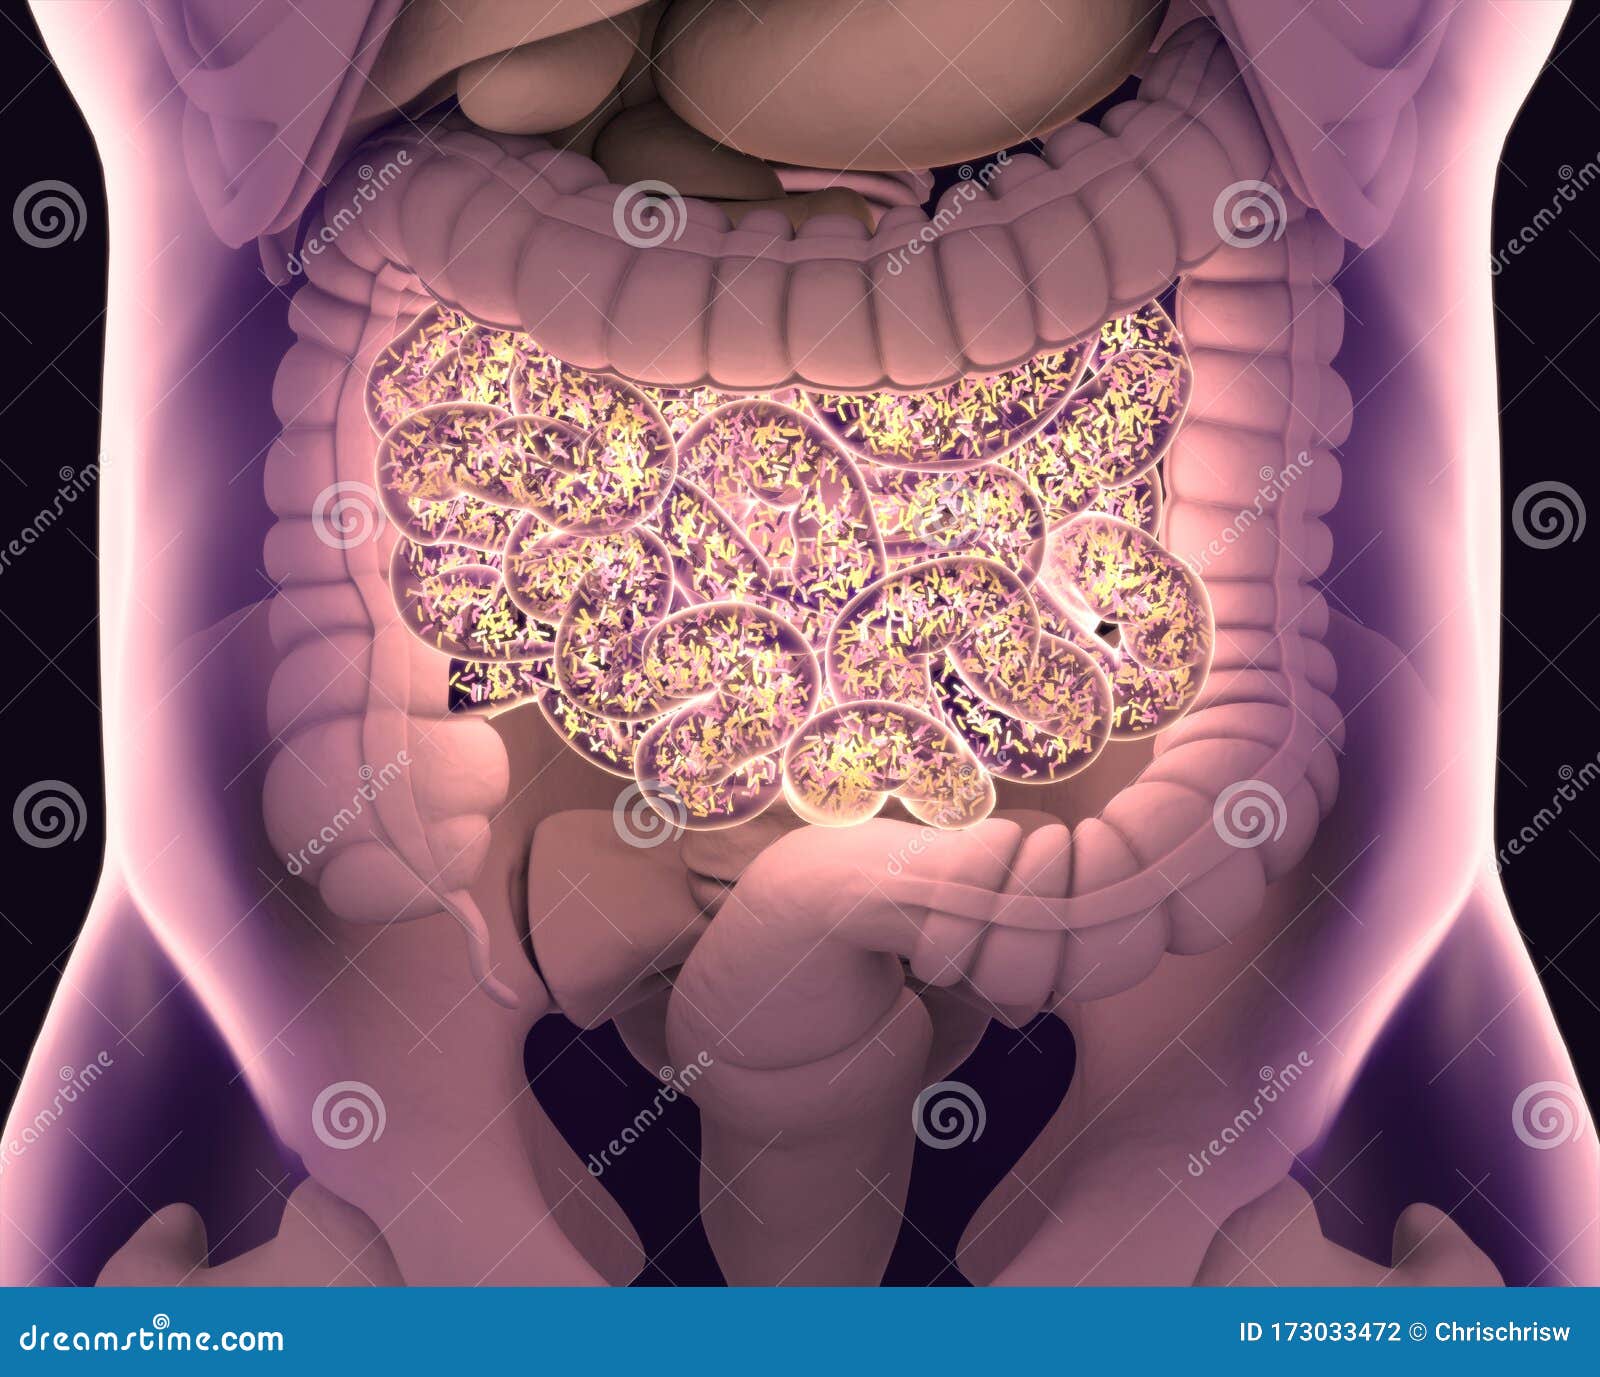 gut bacteria , gut flora, microbiome. bacteria inside the small intestine, concept, representation. 3d 